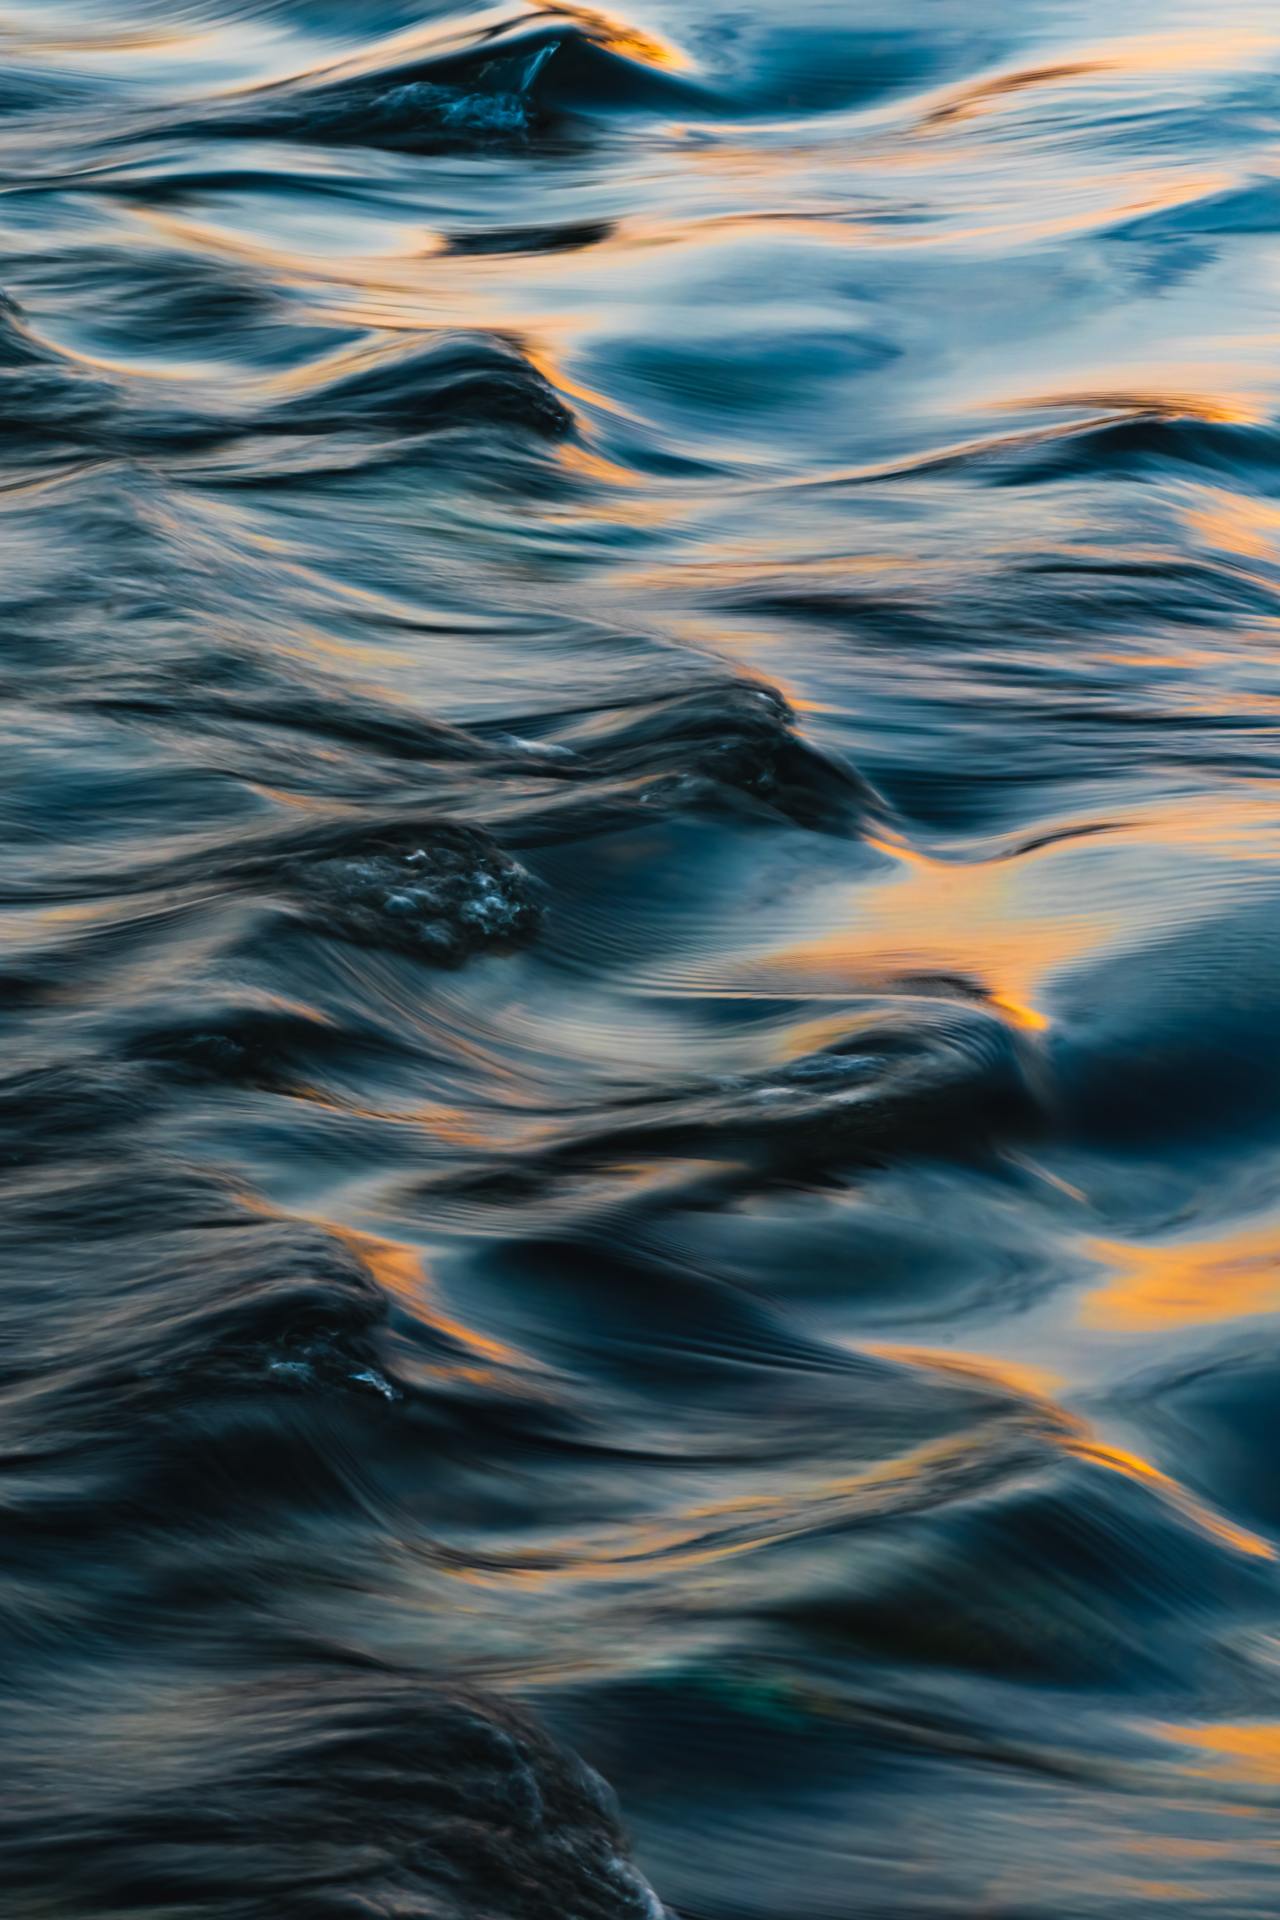 (by Arpit Dhore) #vertical#landscape#x#a#watsf #curators on tumblr #Arpit Dhore#water